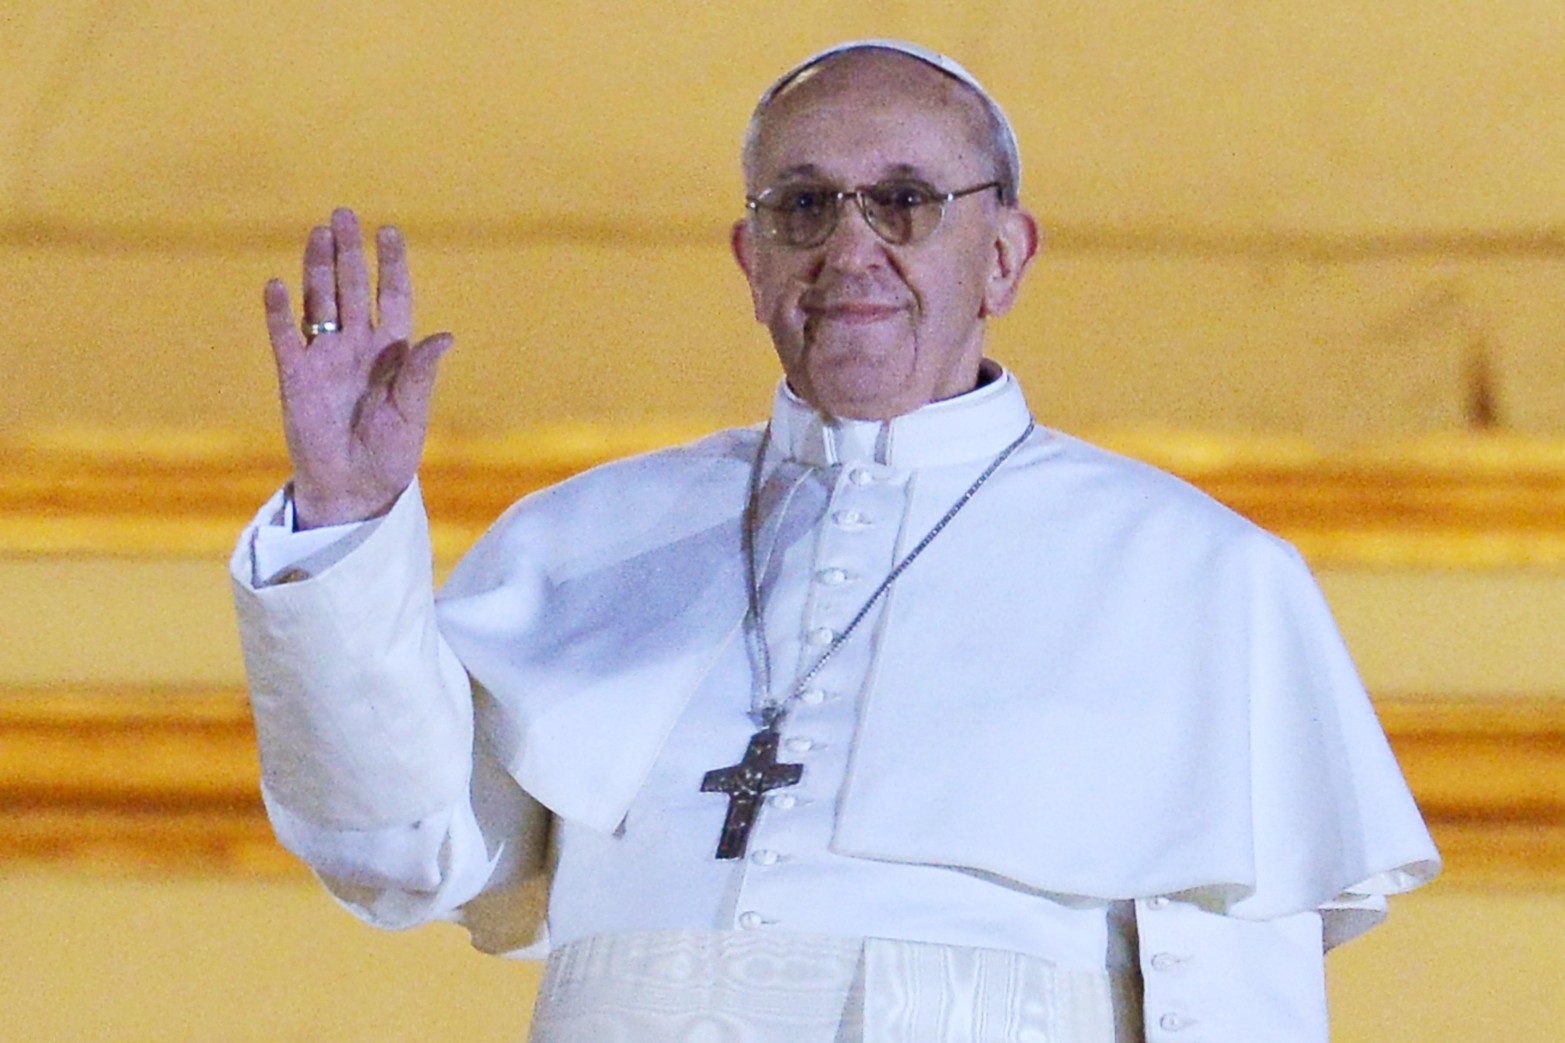  2013. Jorge Bergoglio de Argentina, elegido Papa Francisco I, aparece en la ventana del balcón de la Basílica de San Pedro después de ser elegido Papa número 266 de la Iglesia Católica.